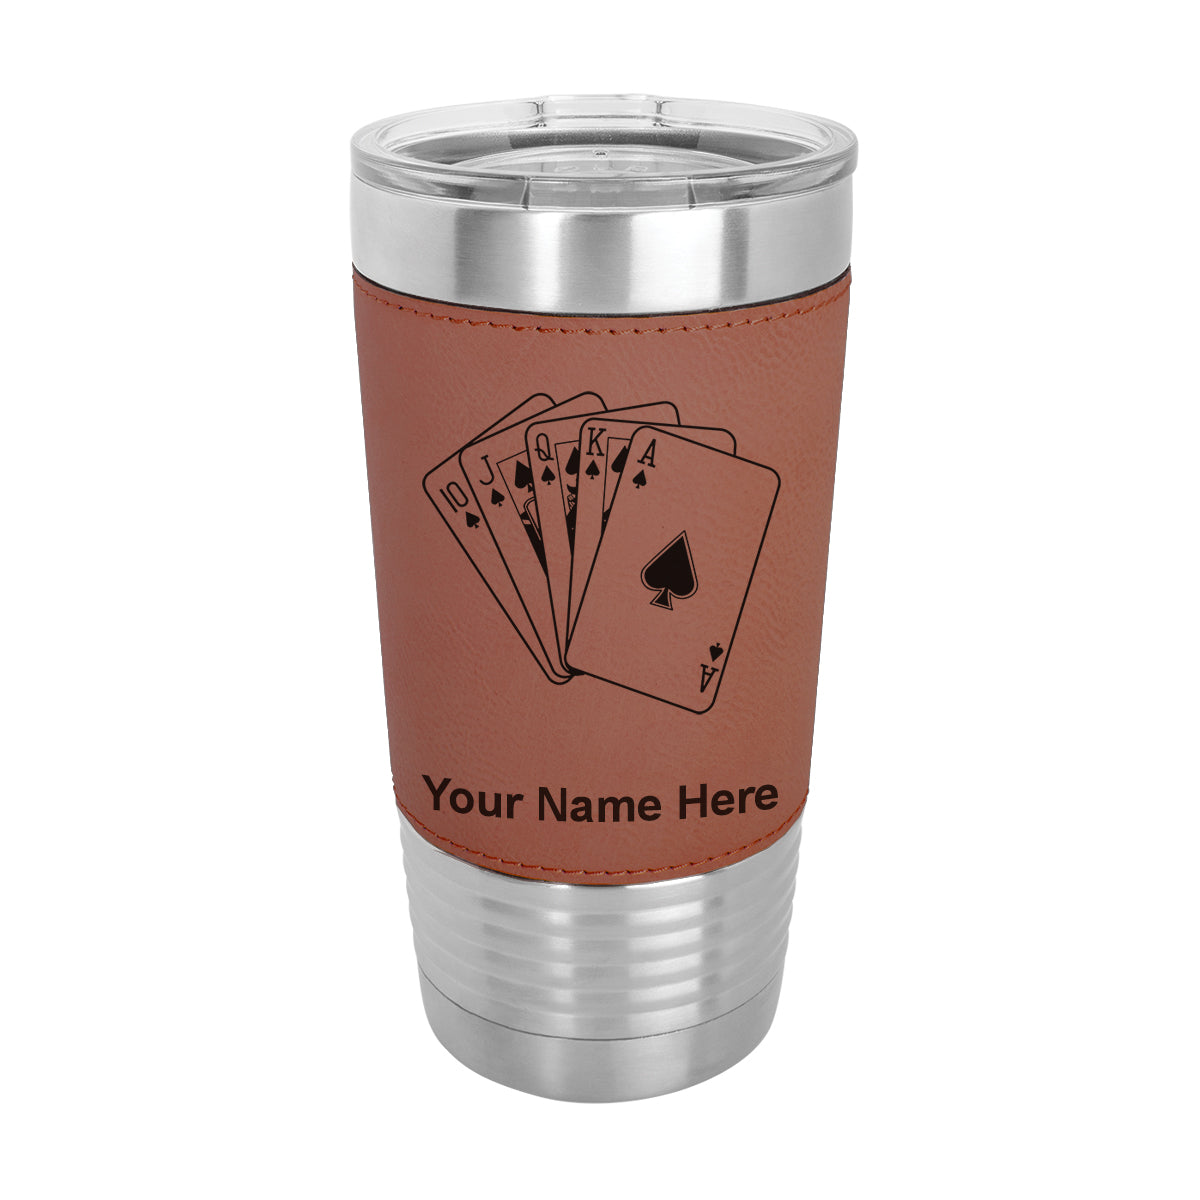 20oz Faux Leather Tumbler Mug, Royal Flush Poker Cards, Personalized Engraving Included - LaserGram Custom Engraved Gifts